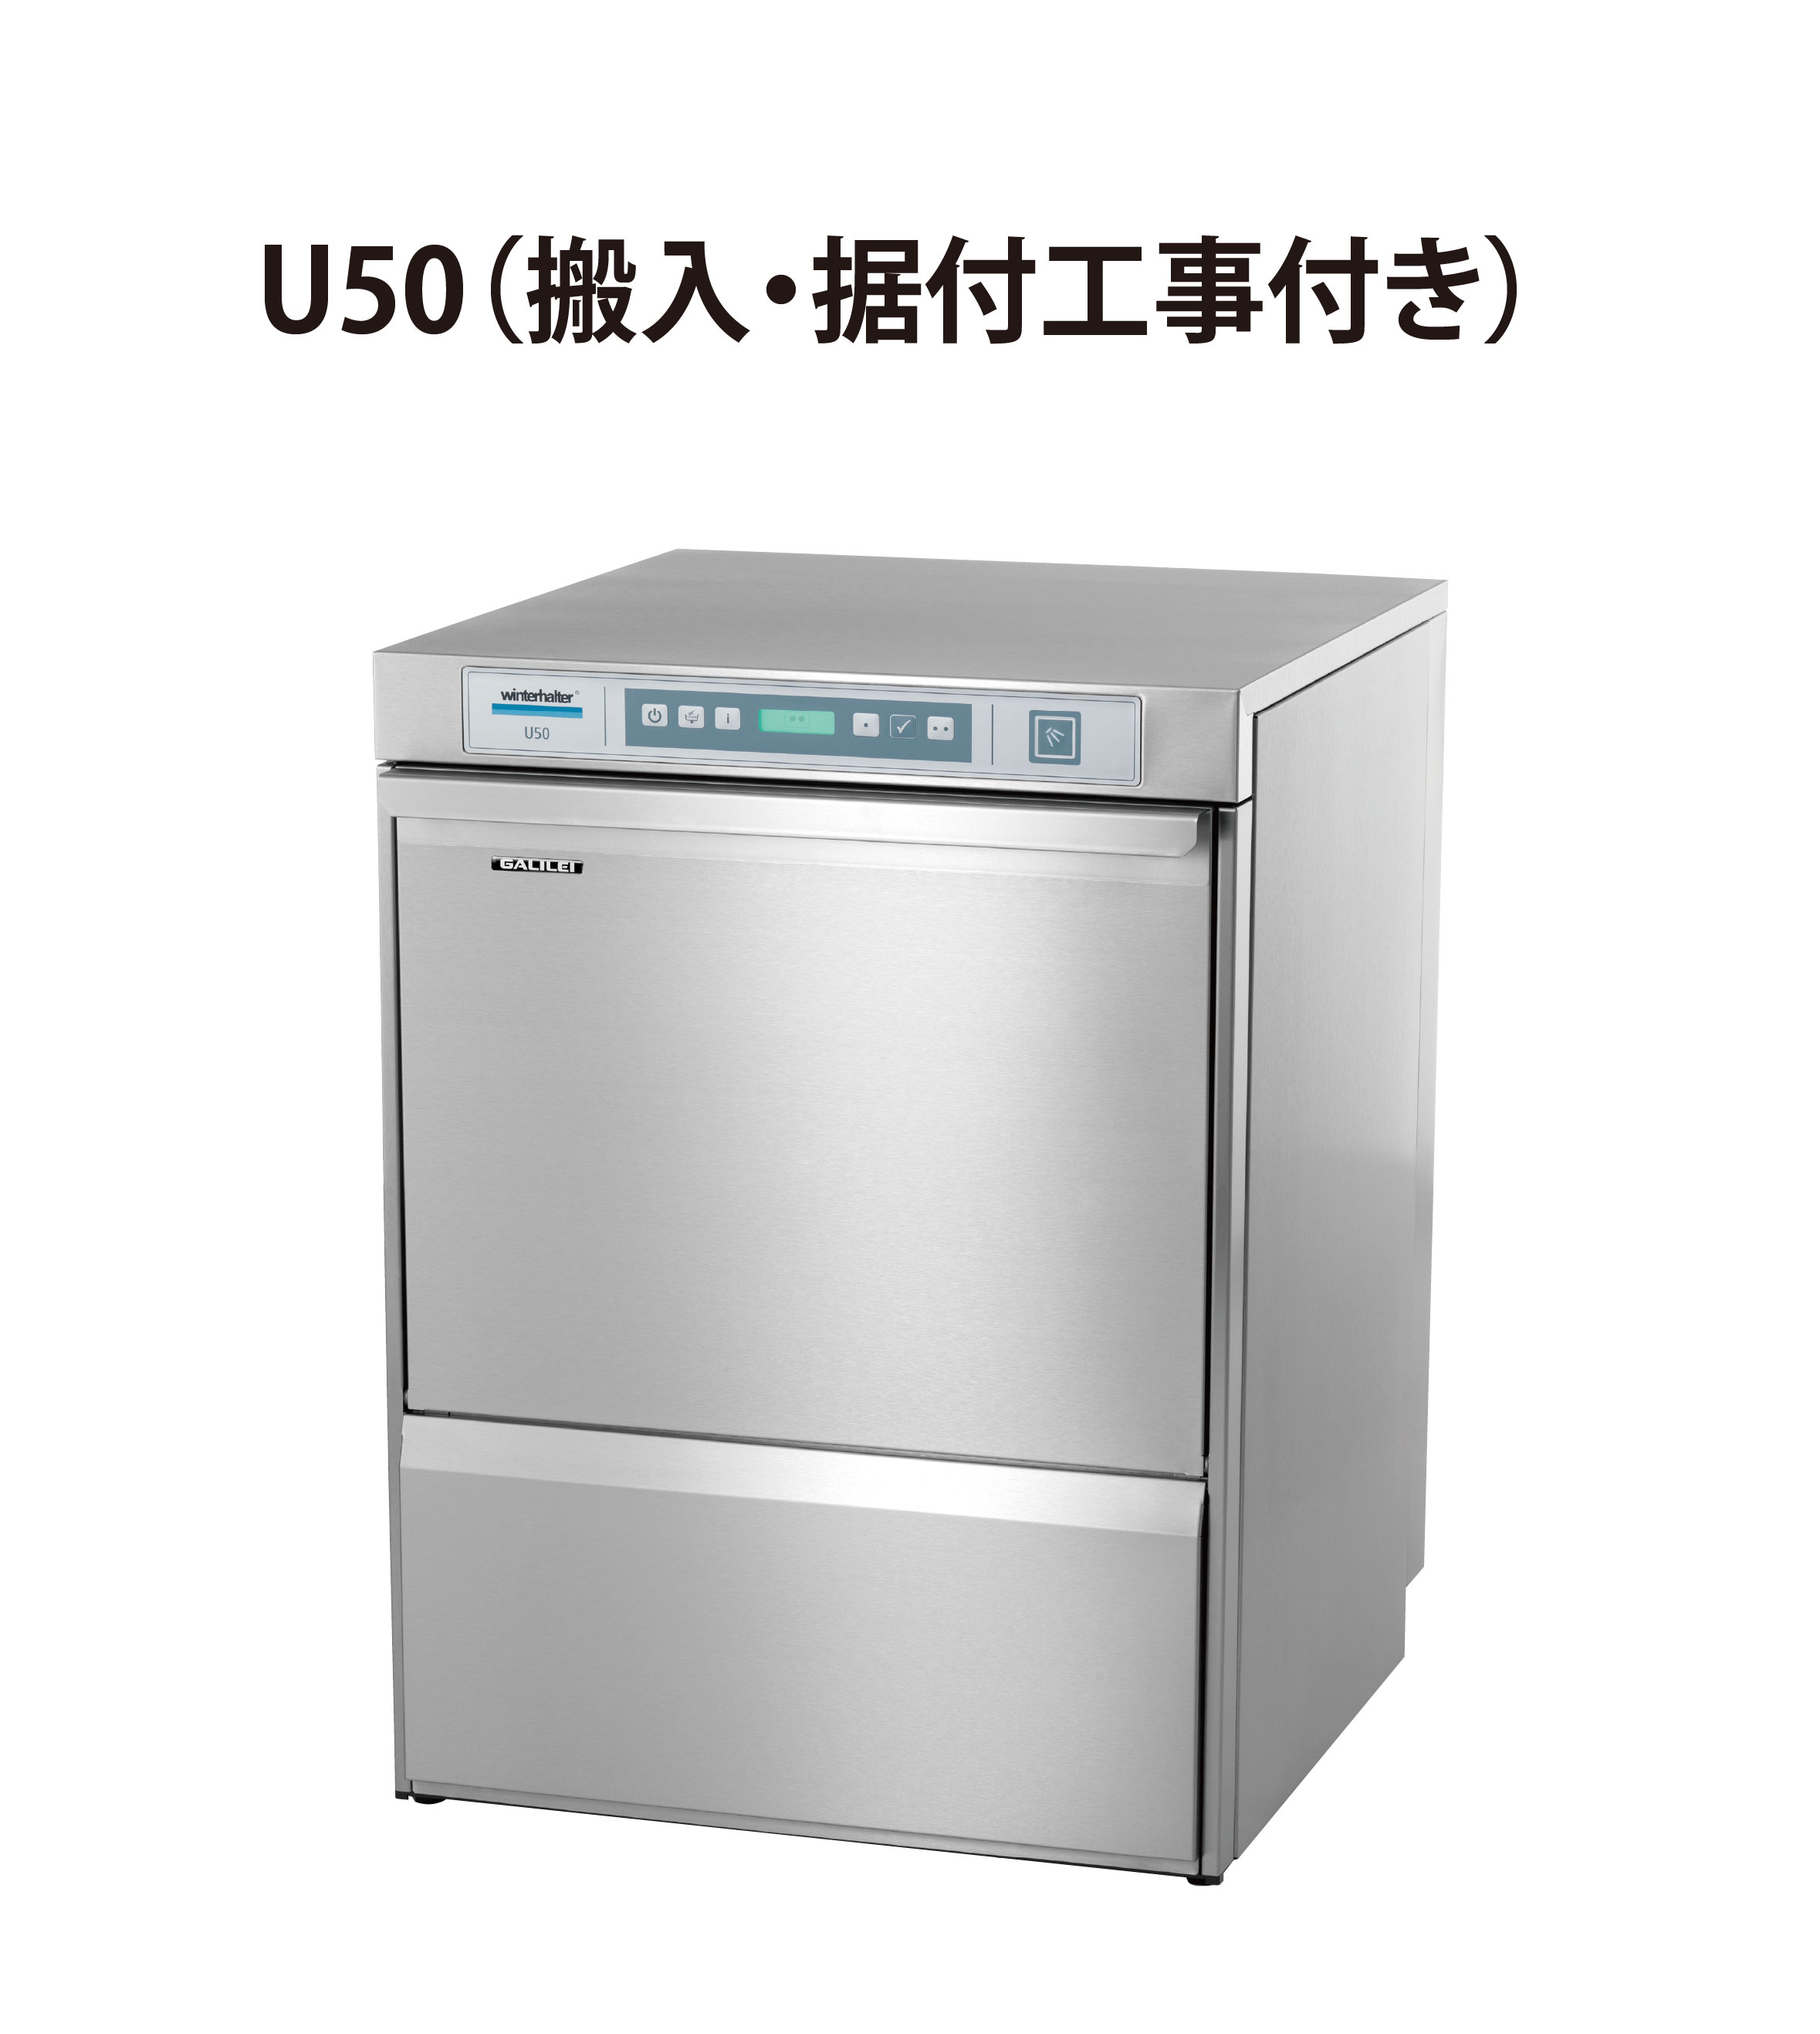 初期費用0円の業務用厨房機器レンタル|【業務用食器洗浄機】U50 W600